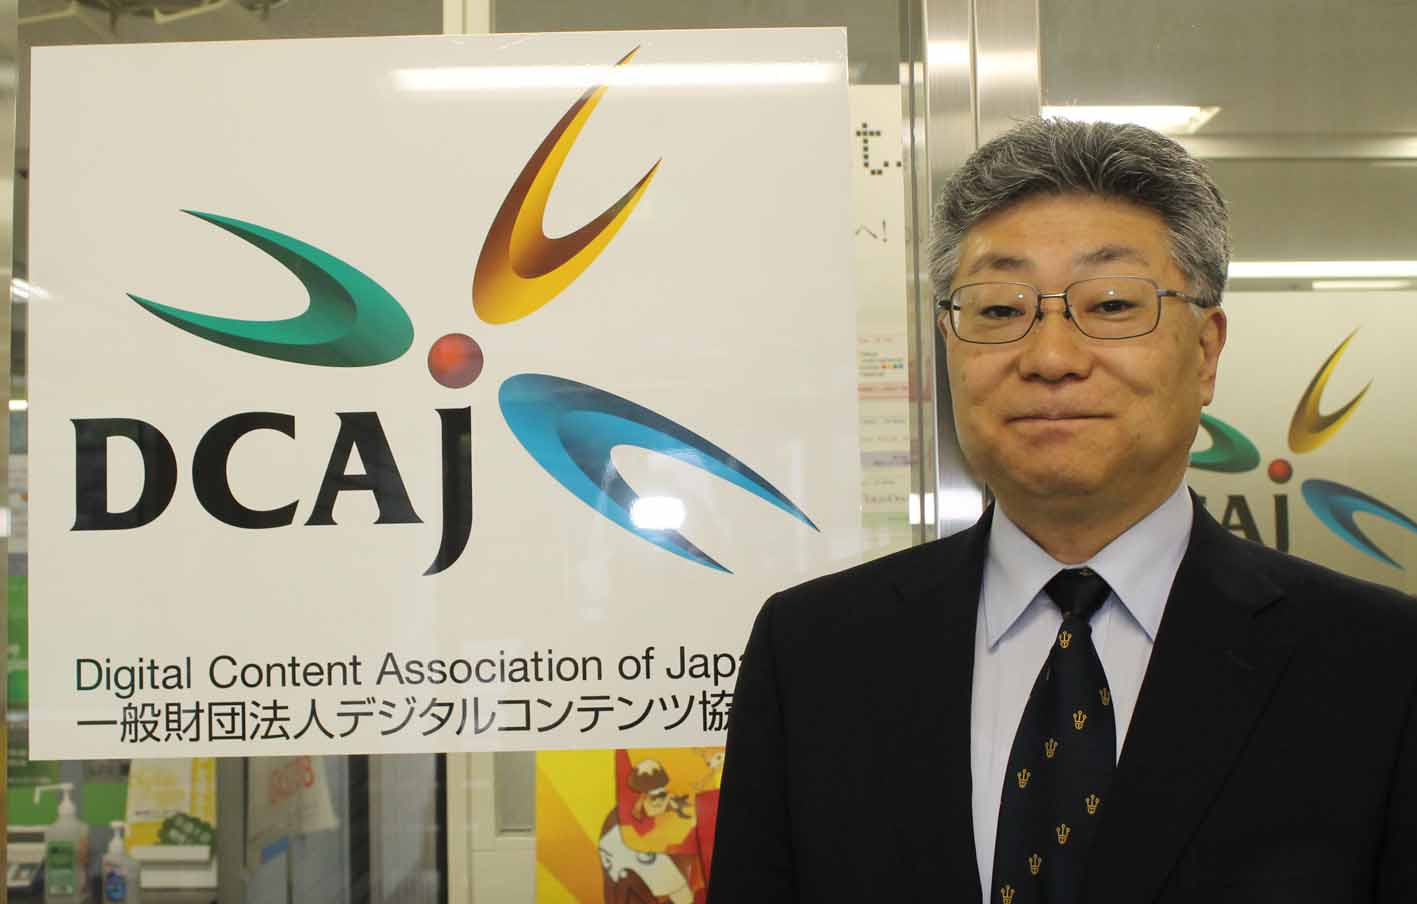 Kensuke Ichihara, Senior Executive Director of the Digital Content Association of Japan